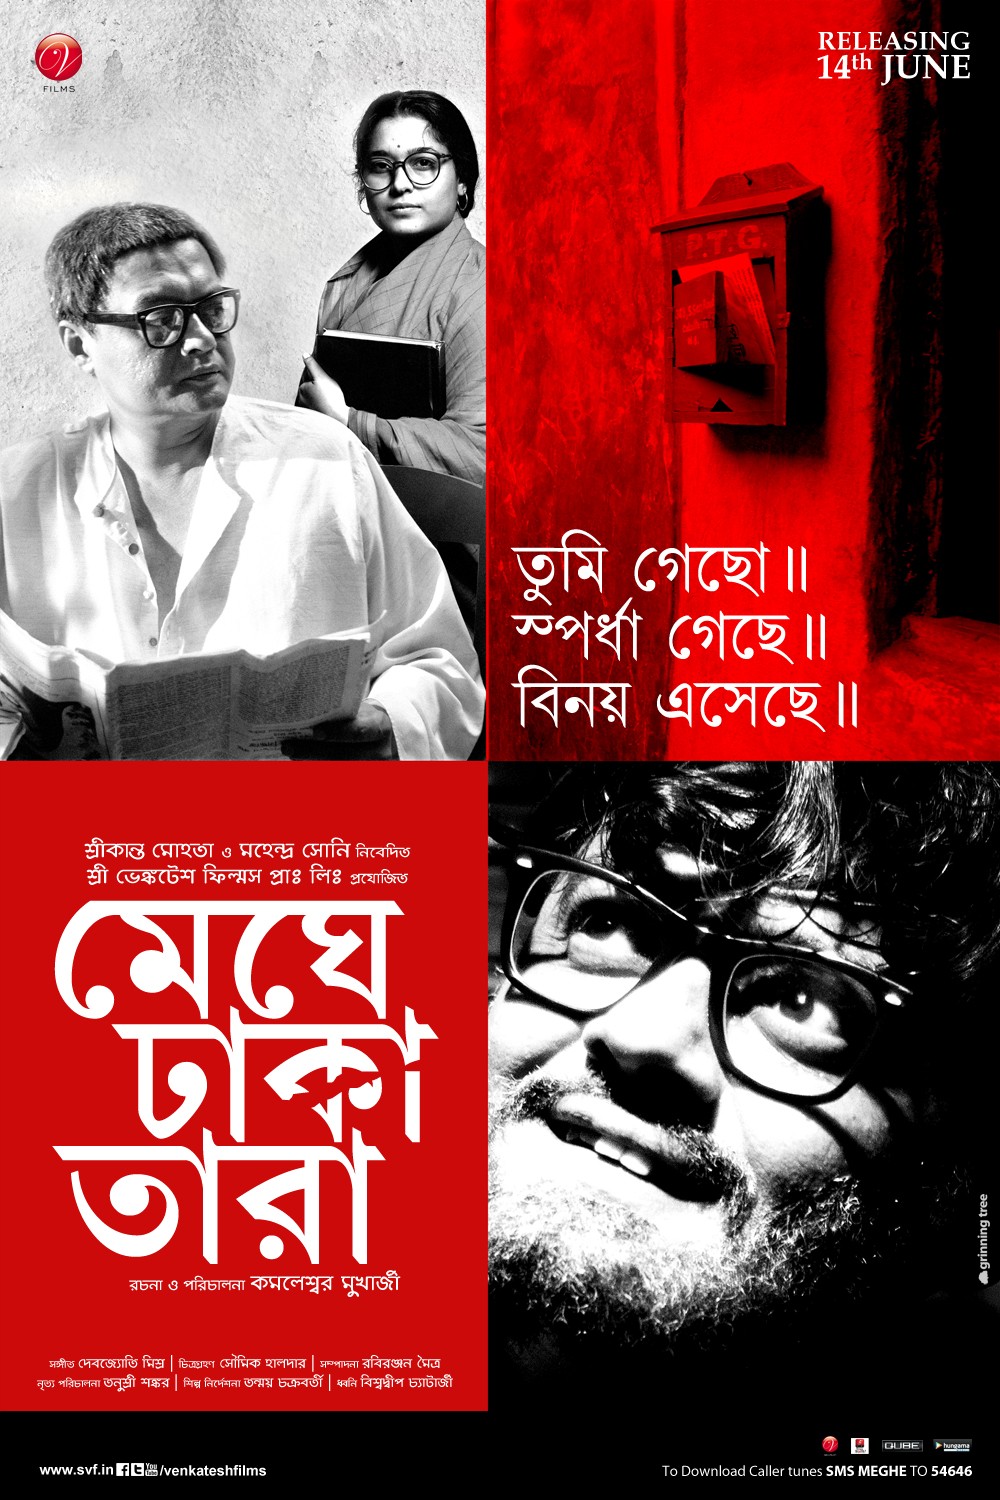 Extra Large Movie Poster Image for Meghe Dhaka Tara (#2 of 7)